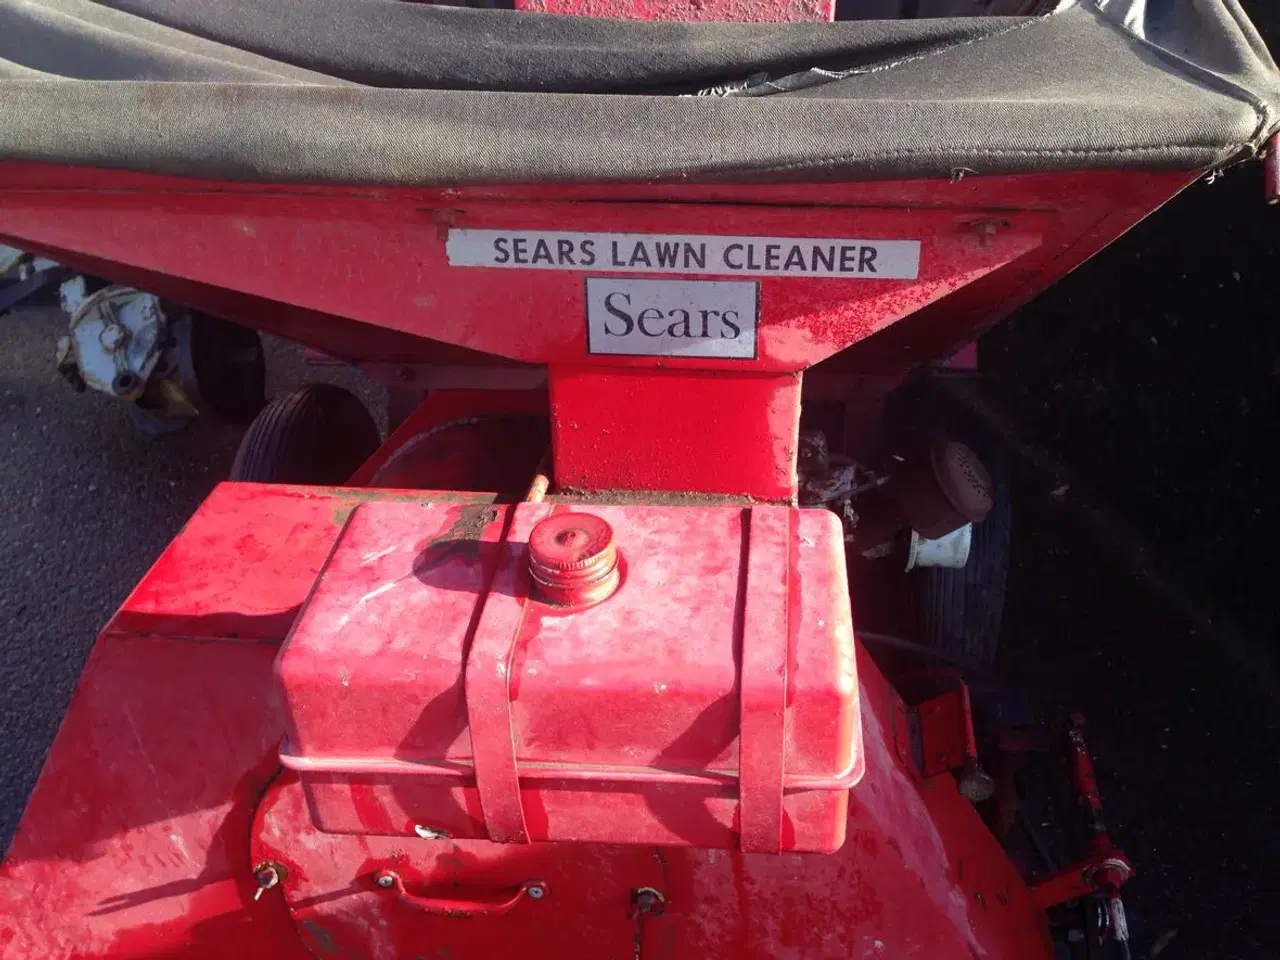 Billede 1 - Sears lawn cleaner søges